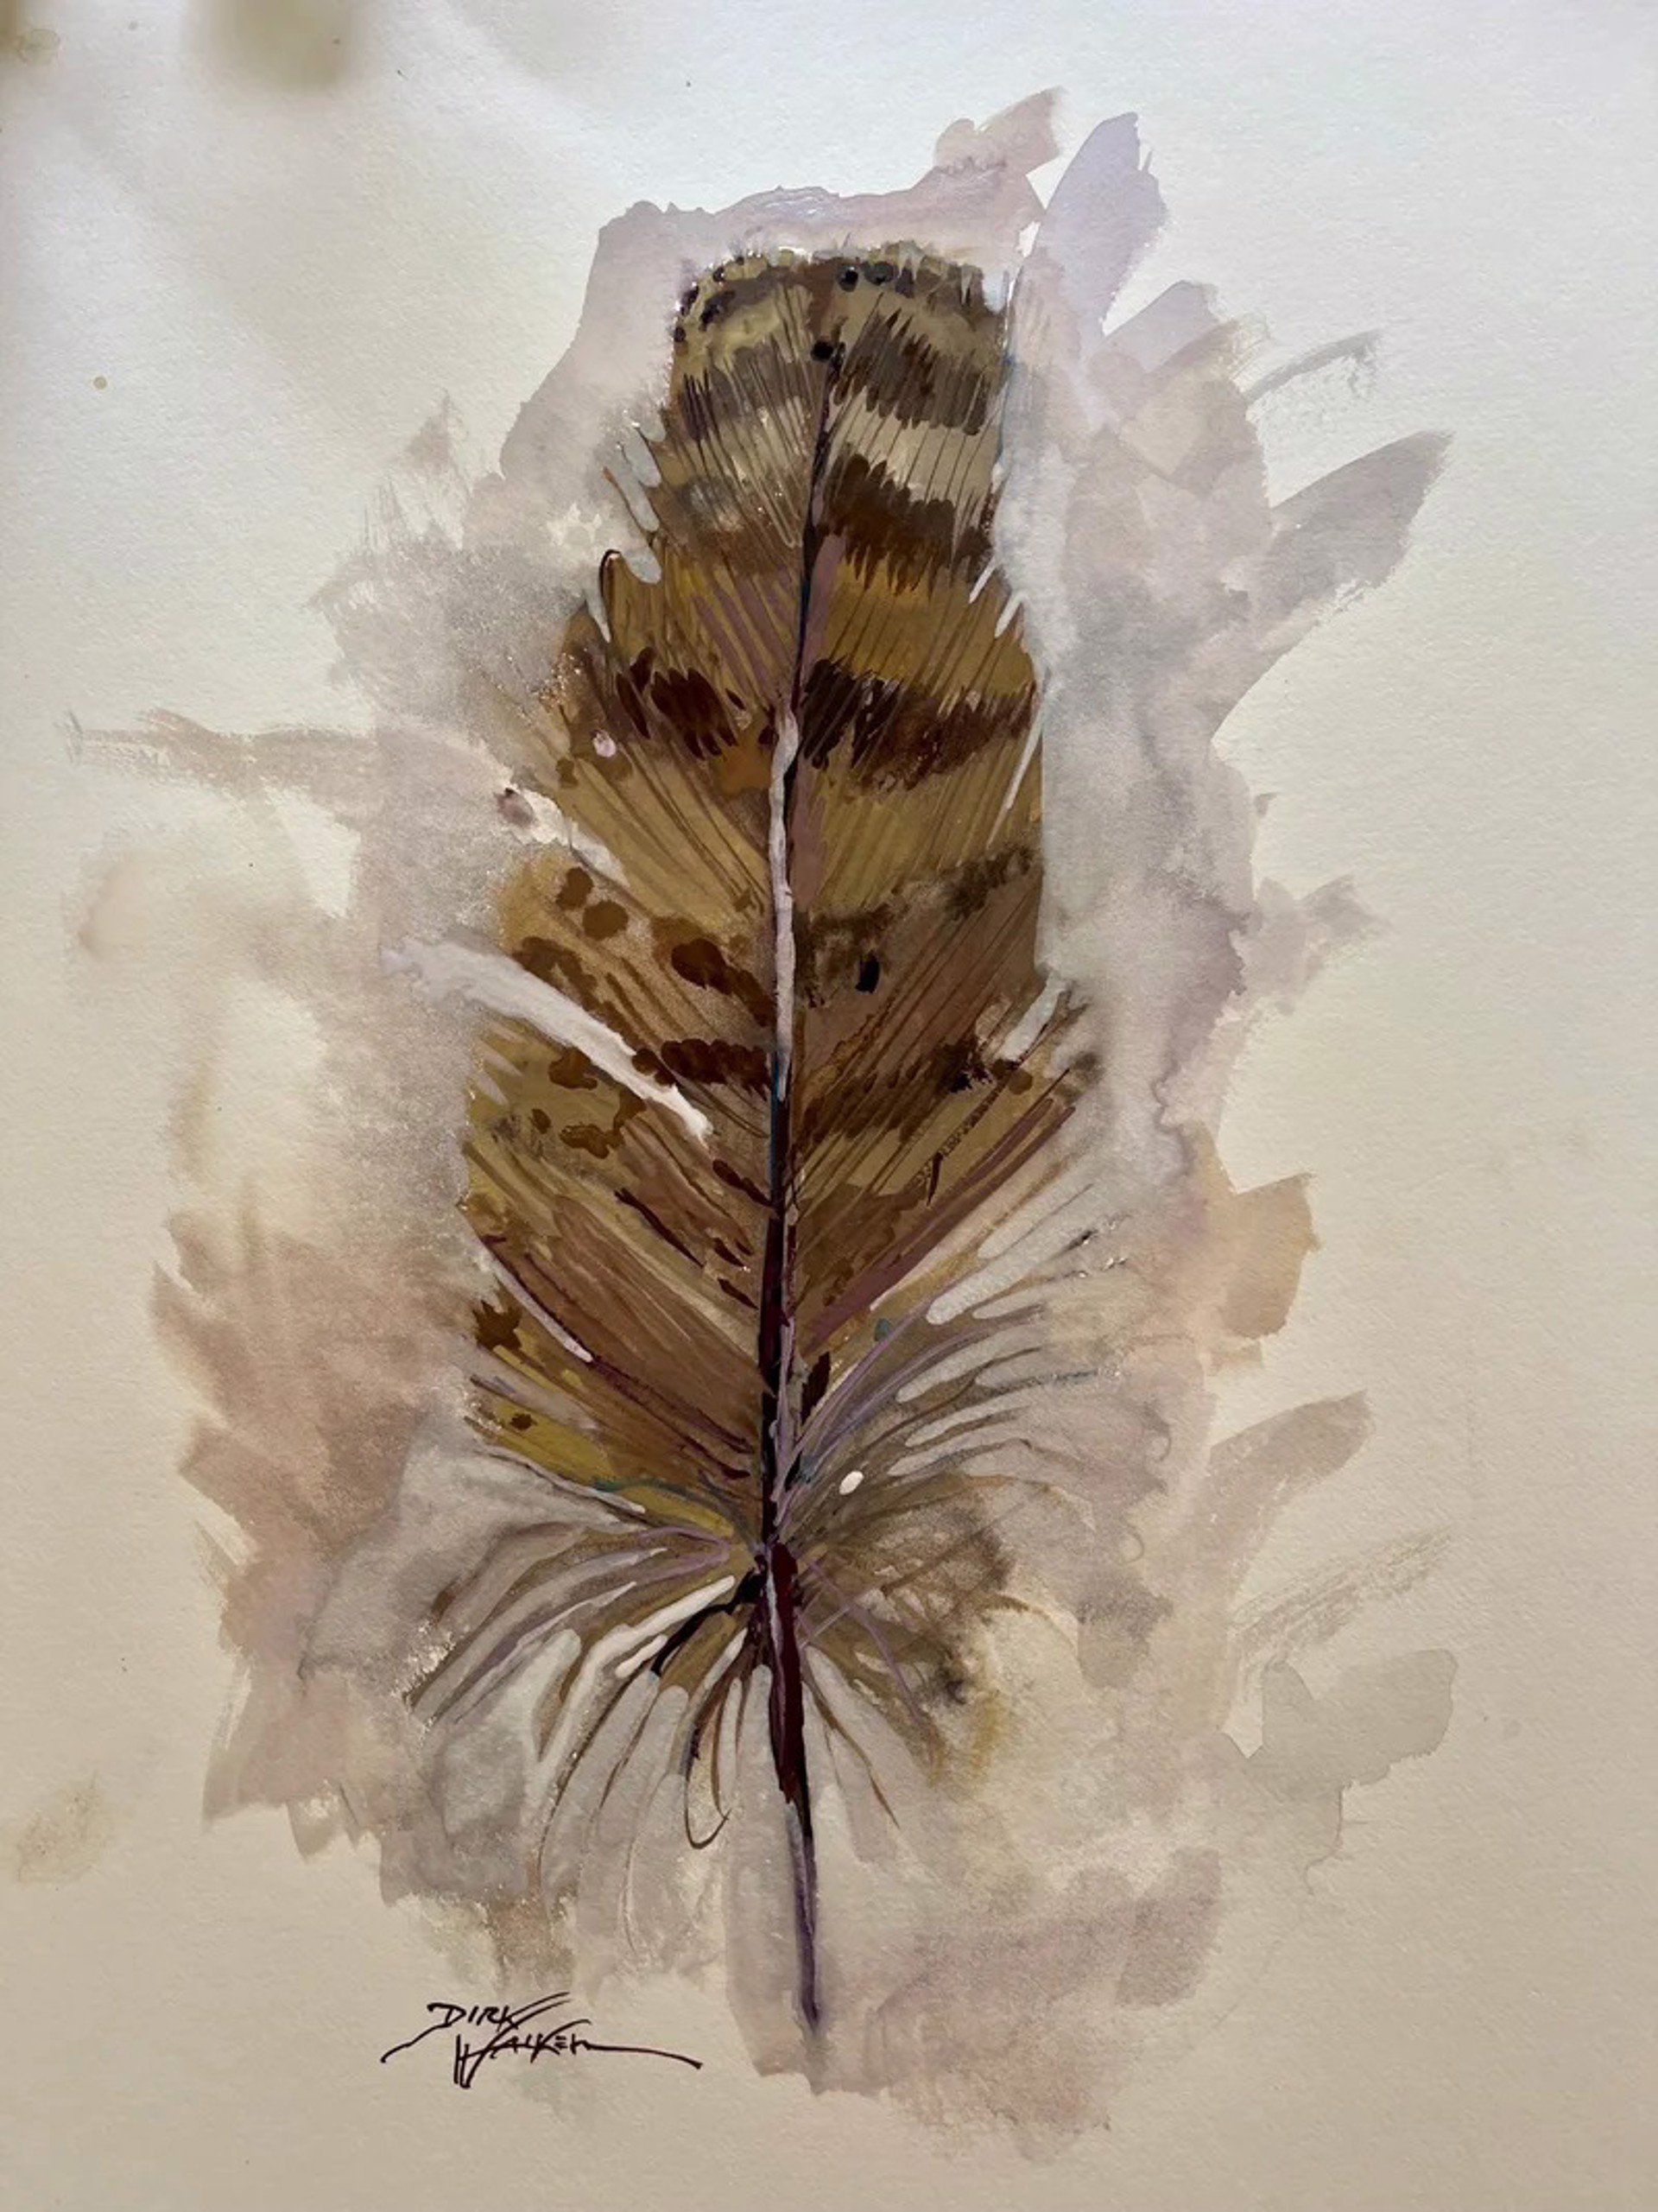 Pheasant Feather by Dirk Walker